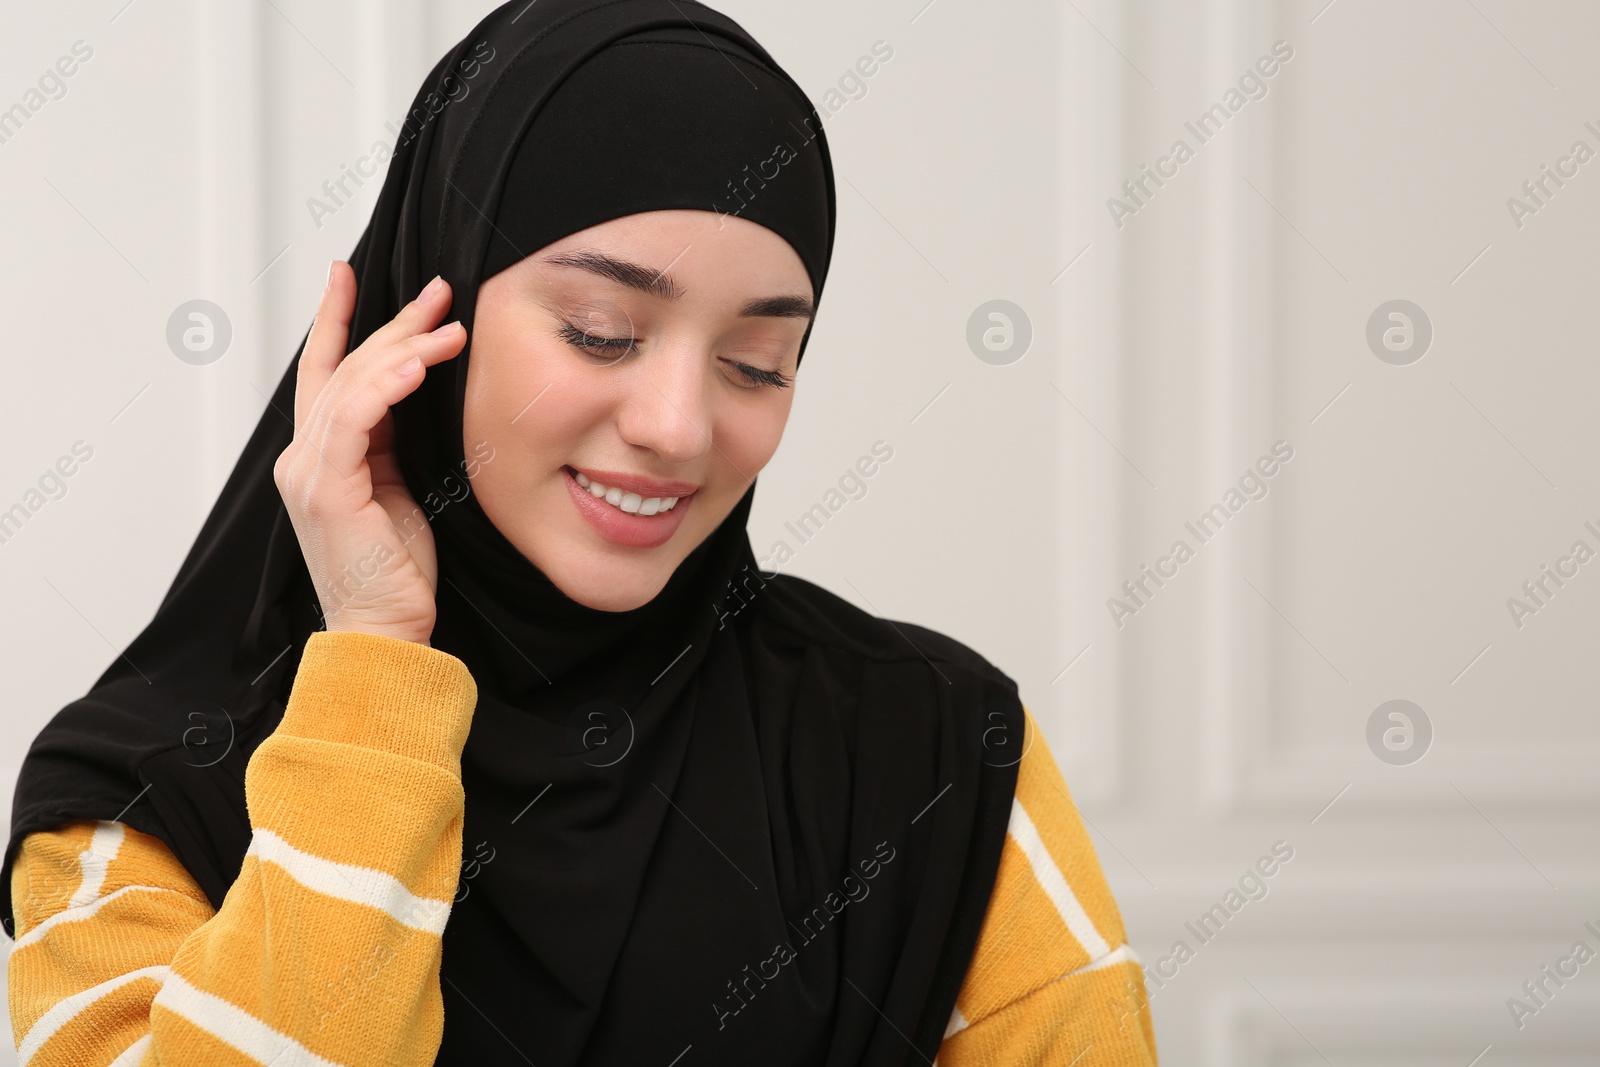 Photo of Beautiful Muslim woman wearing black hijab indoors